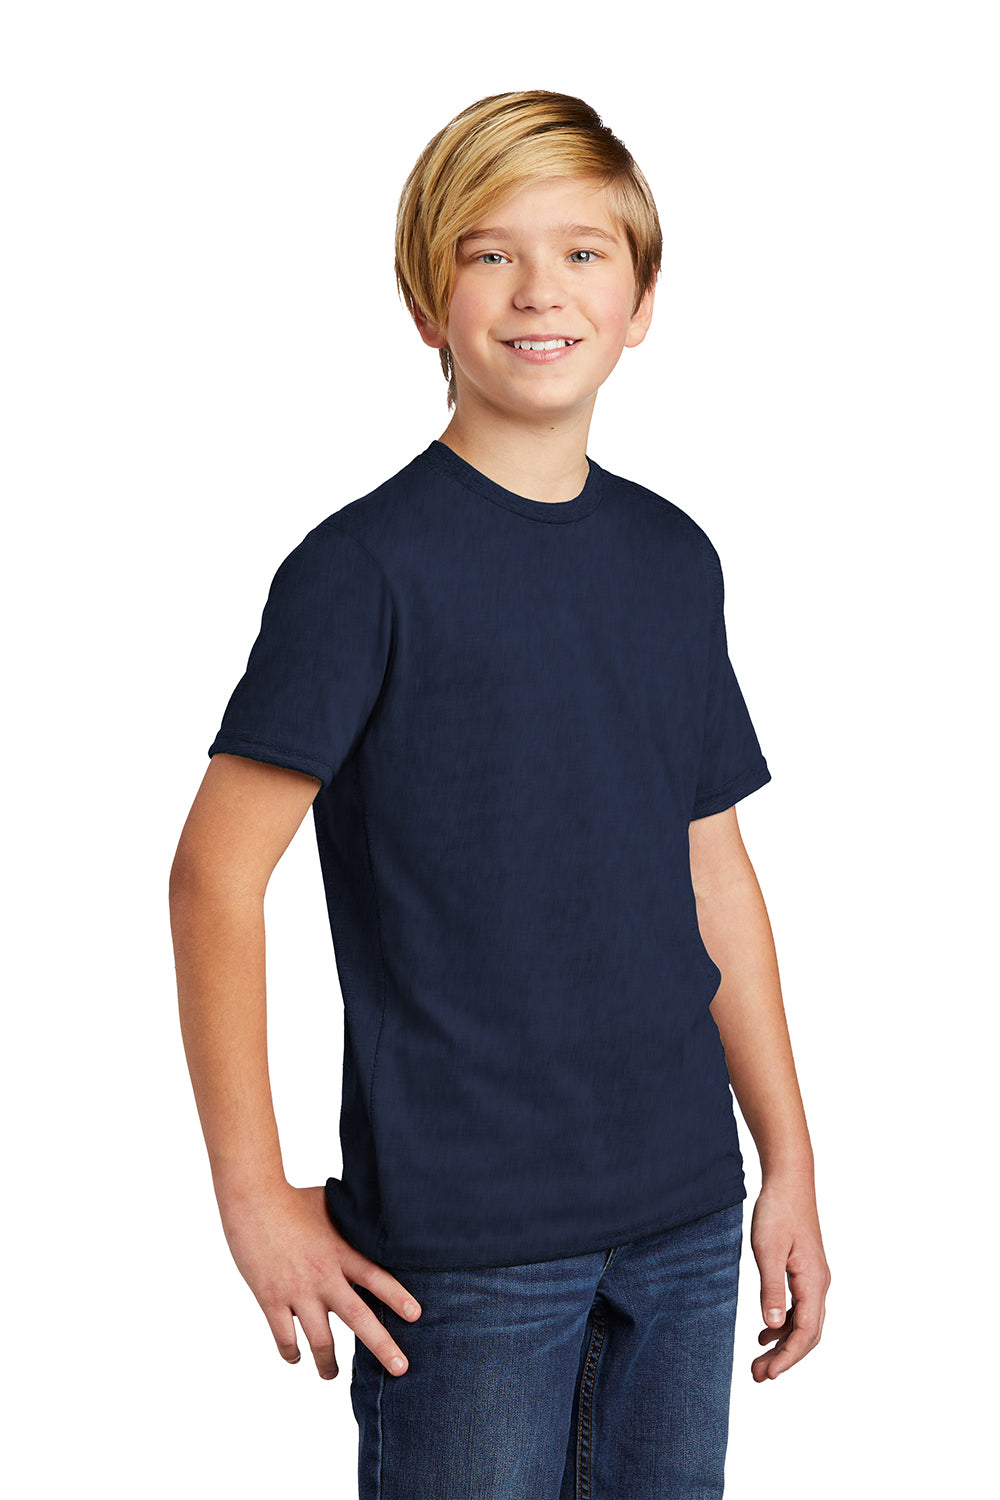 Allmade AL207 Youth Short Sleeve Crewneck T-Shirt Night Sky Navy Blue Model 3Q